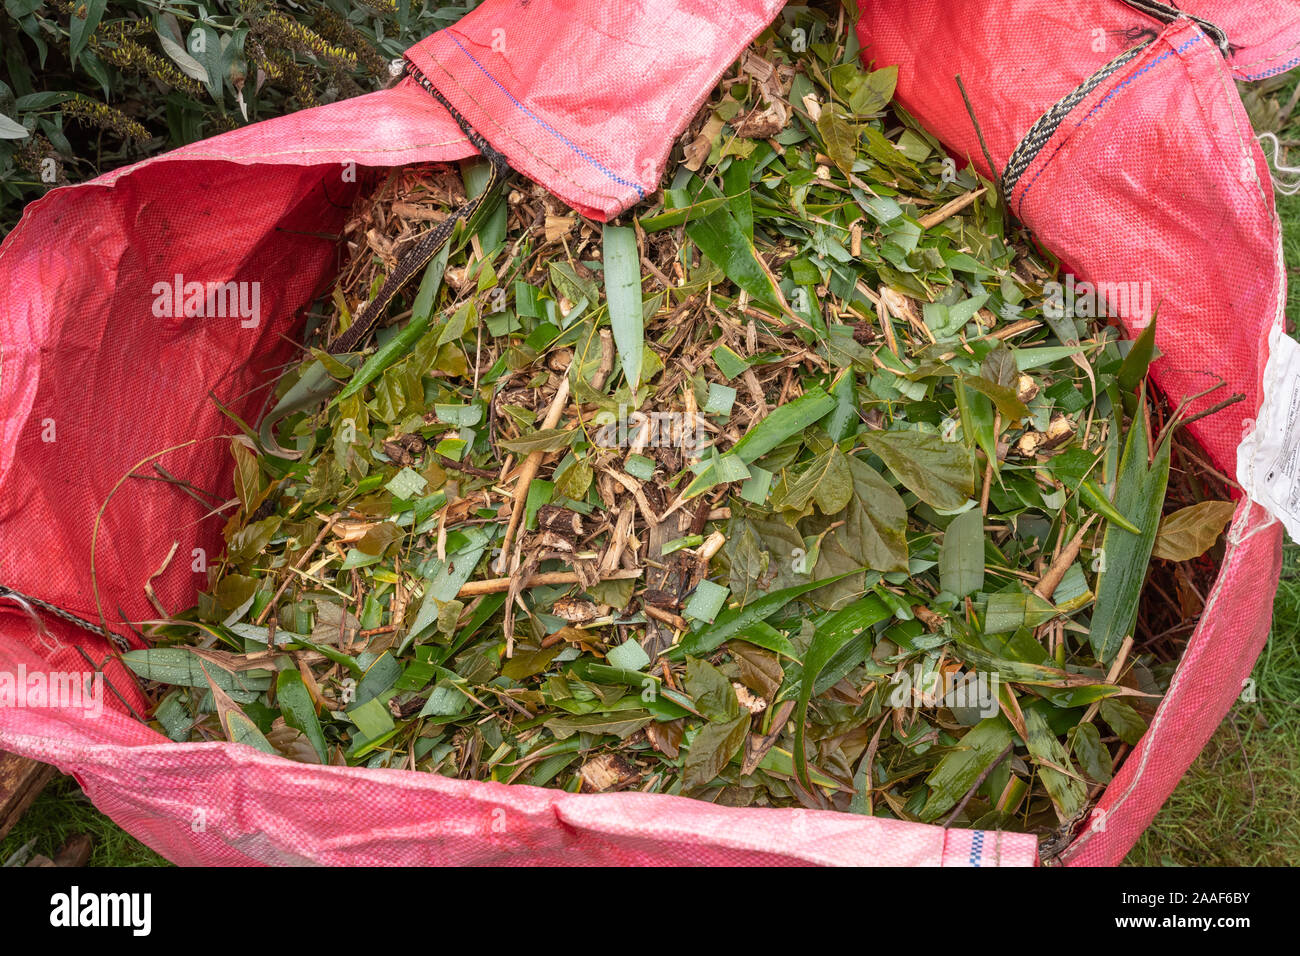 Shredded garden waste in a heavy duty red waste bag Stock Photo